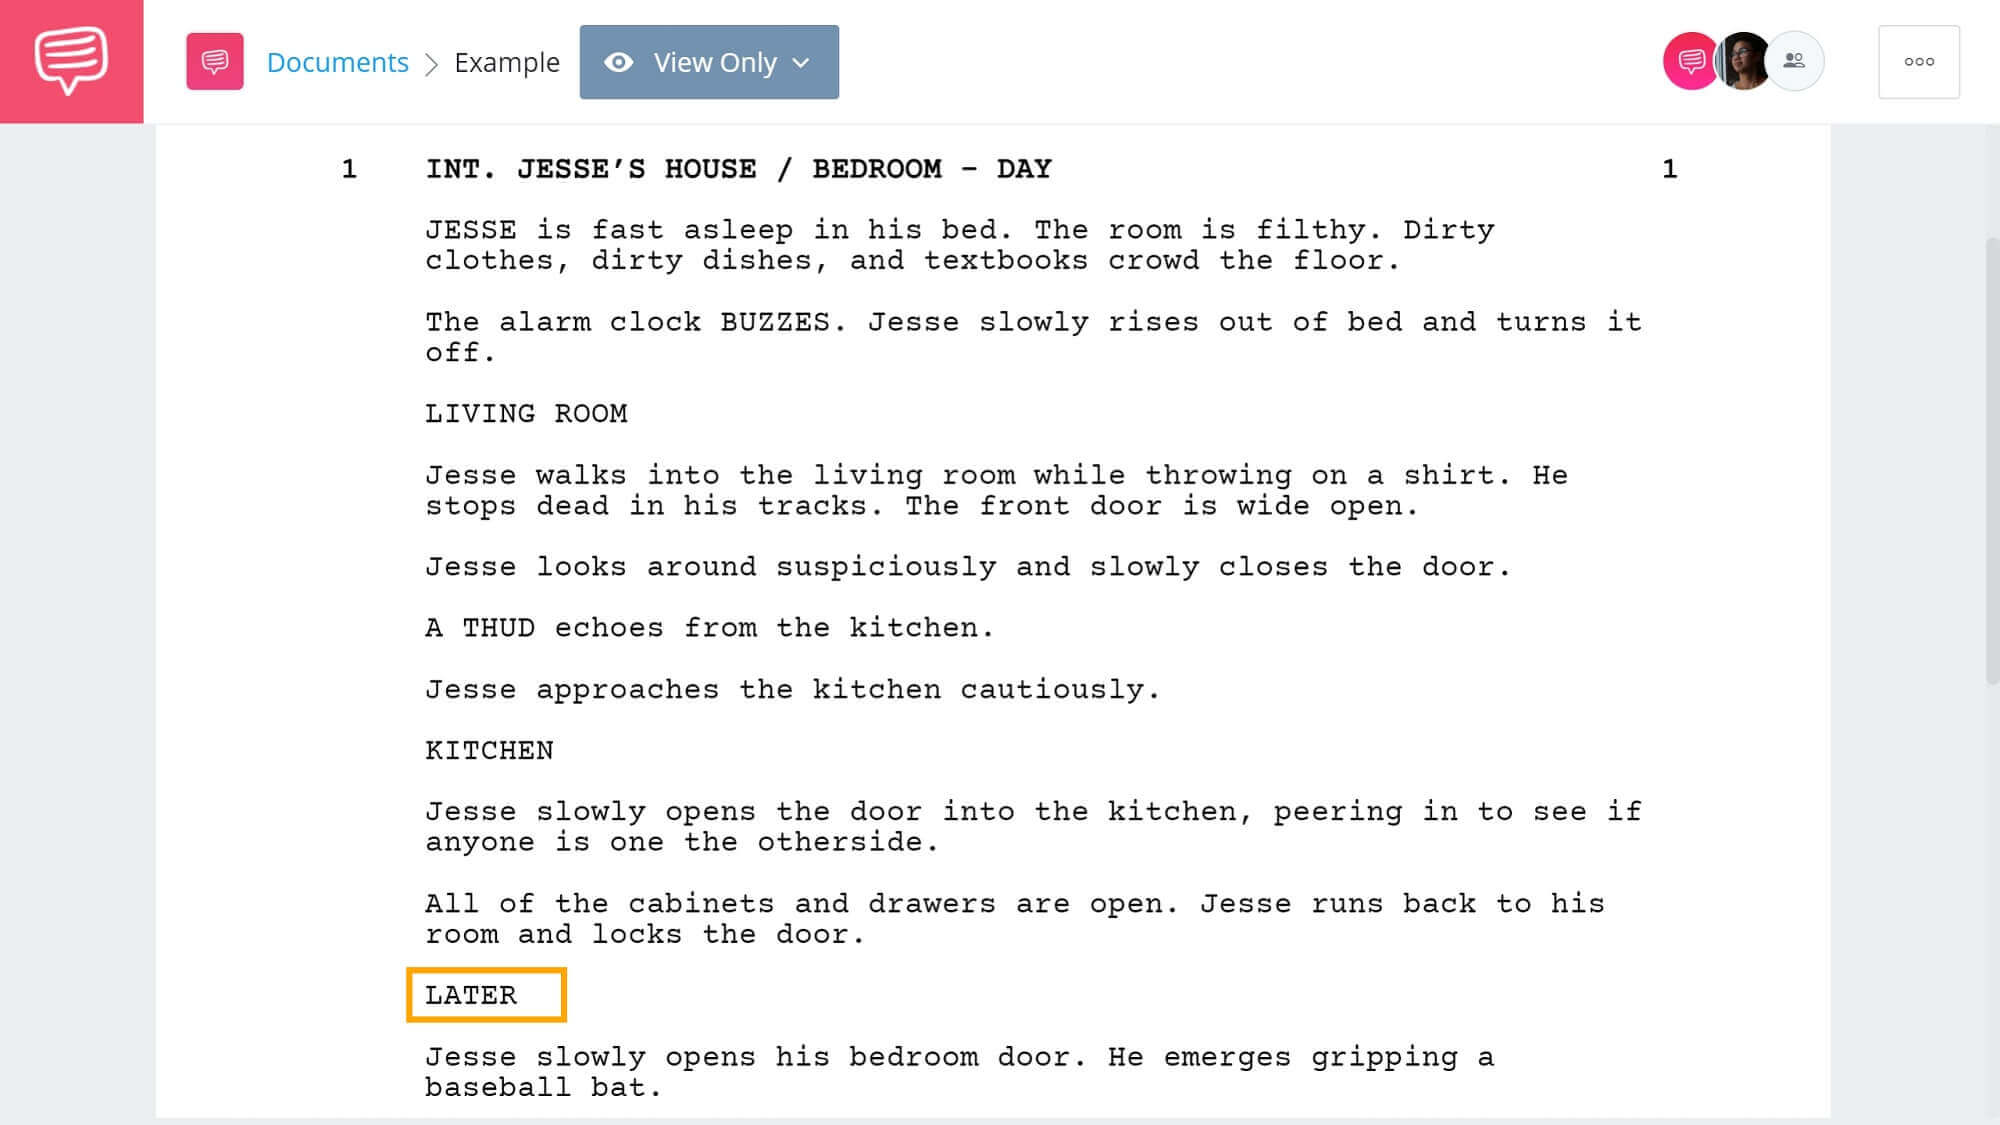 How To Write Slug Lines - Slug Line Example With Passage of Time - StudioBinder Screenwriting Software